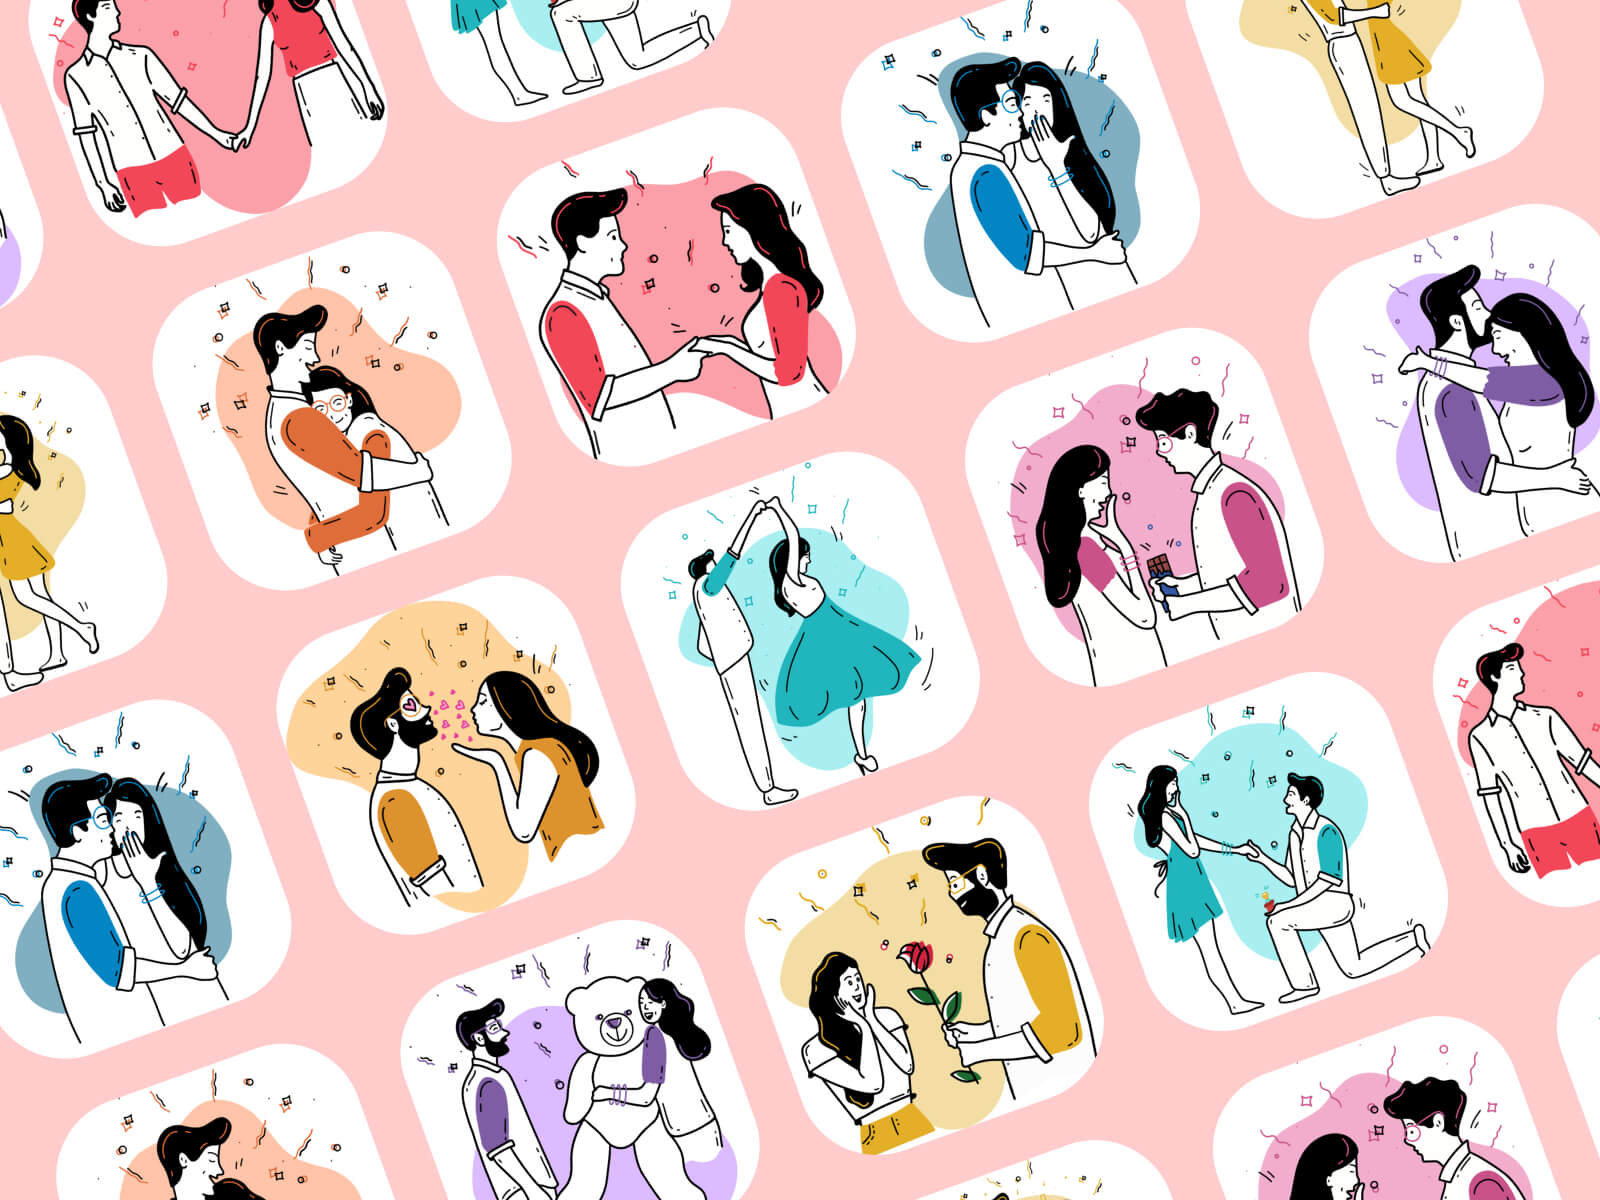 30 Free Valentine's Illustration Packs